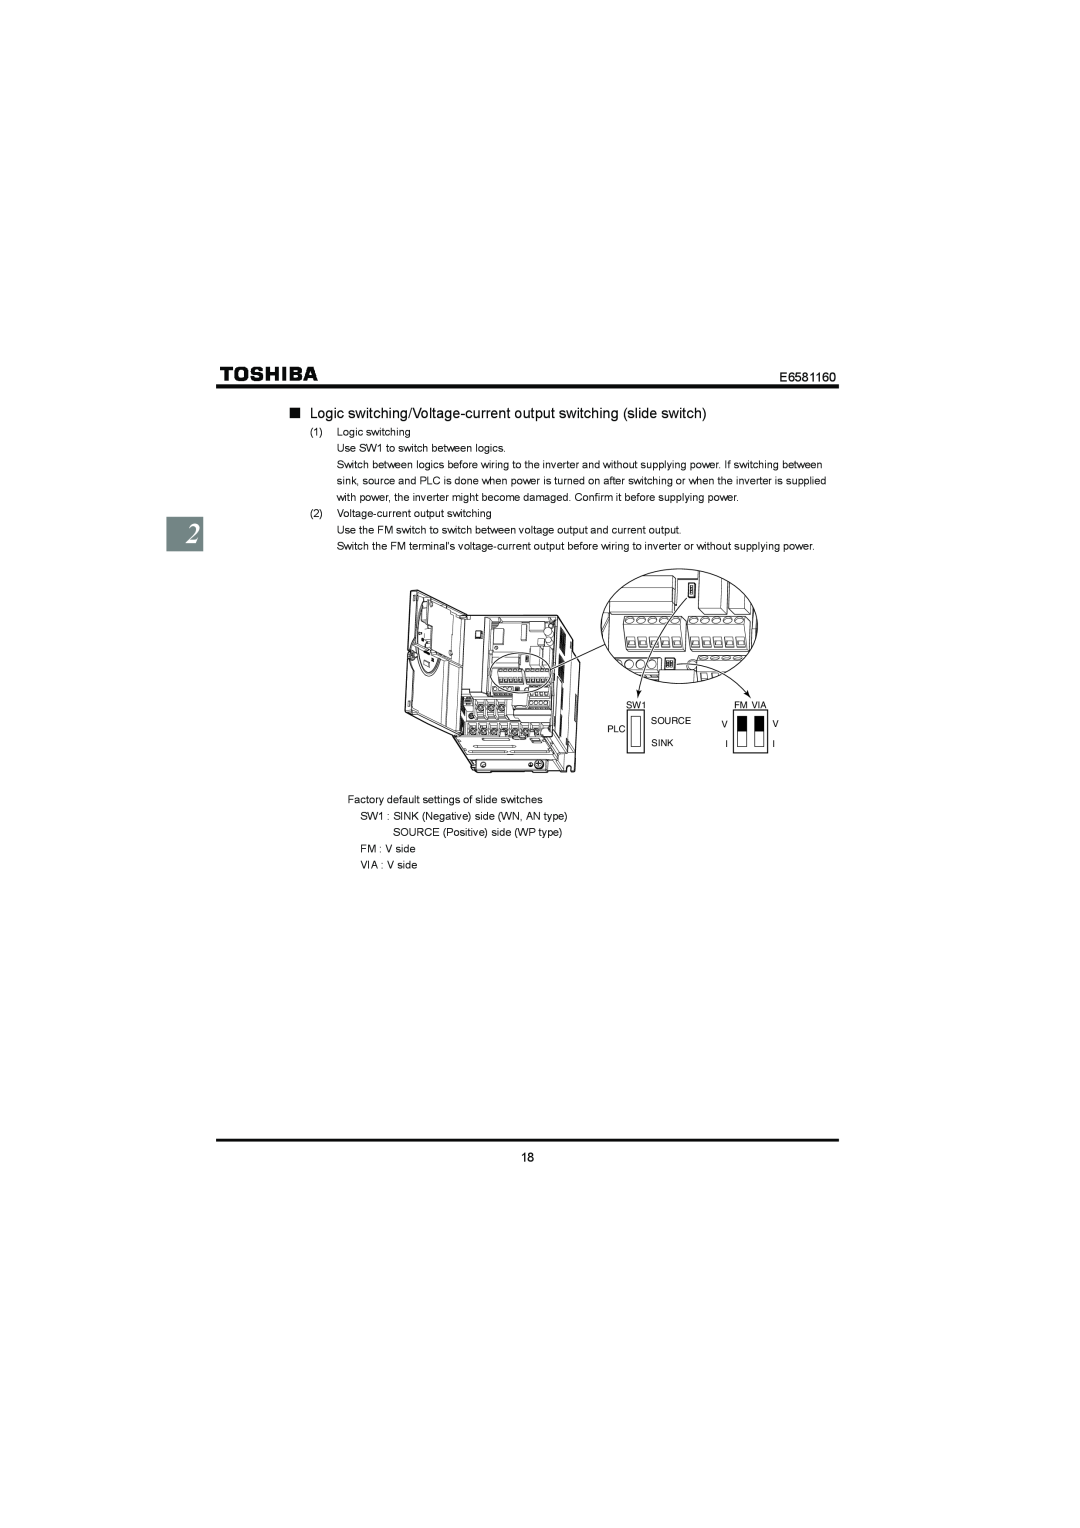 Toshiba VF-S11 manual E6581160 